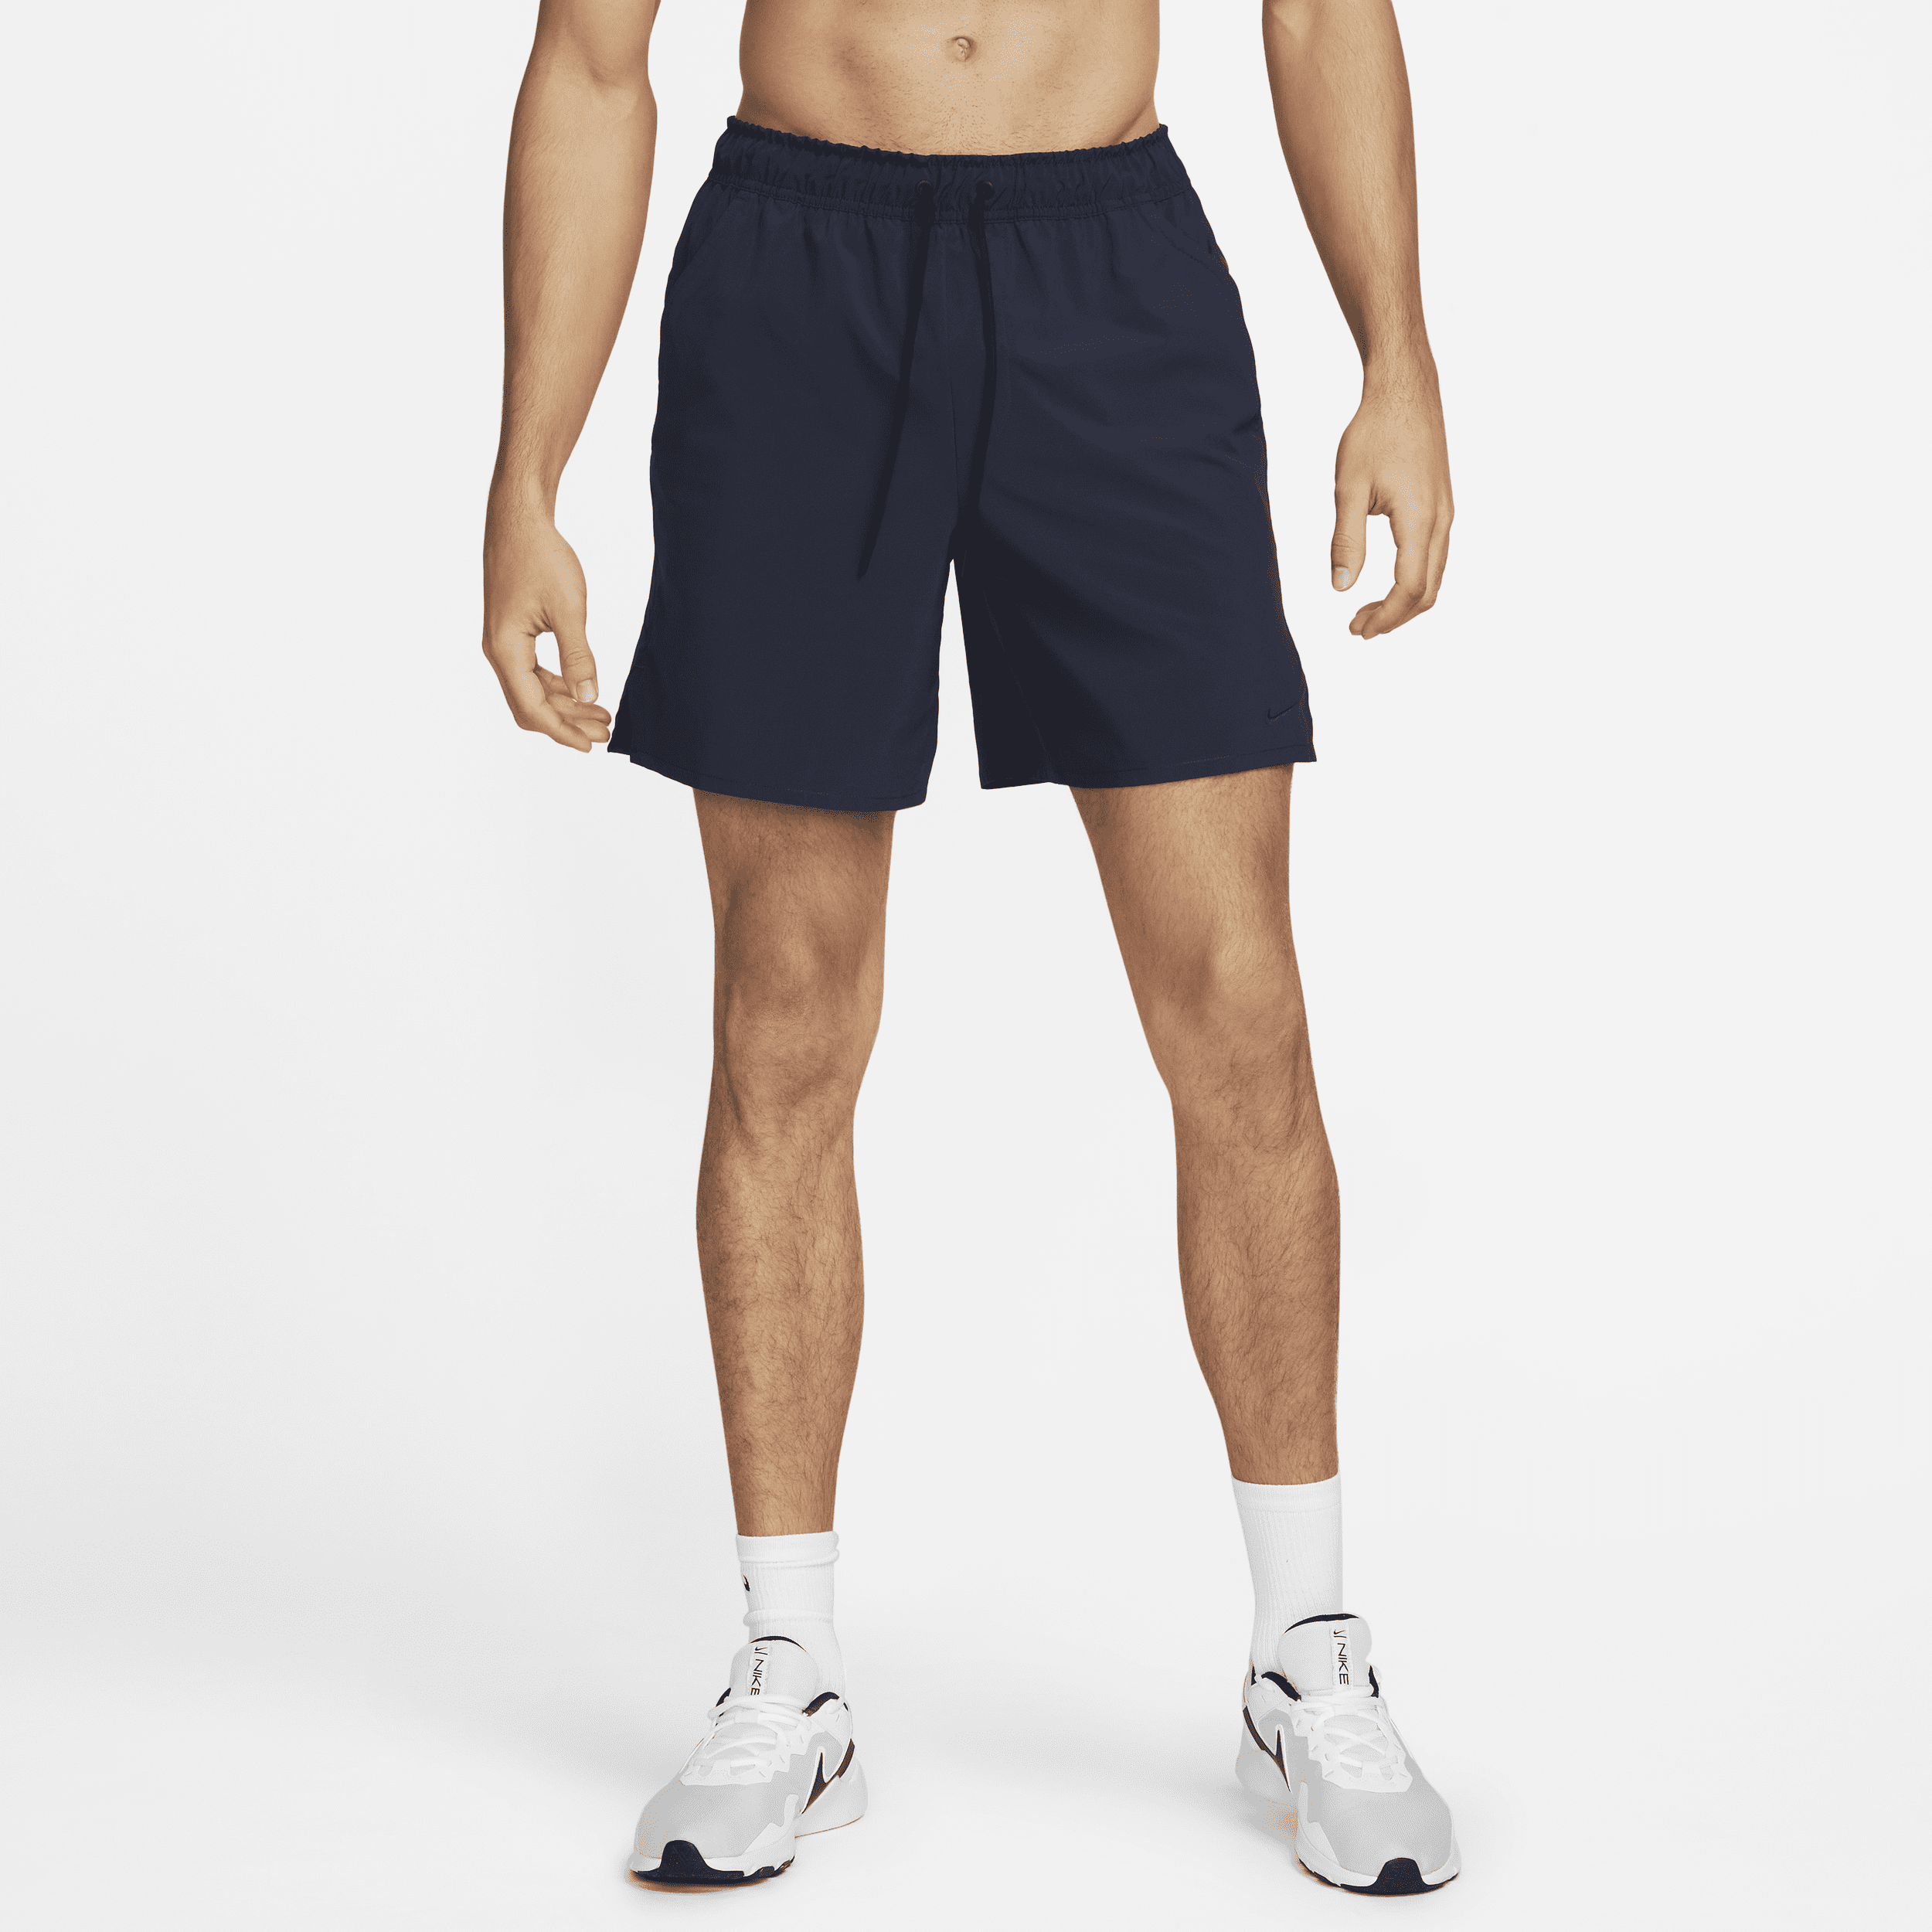 Nike Unlimited Pantalón corto Dri-FIT versátil de 18 cm sin forro - Hombre - Azul